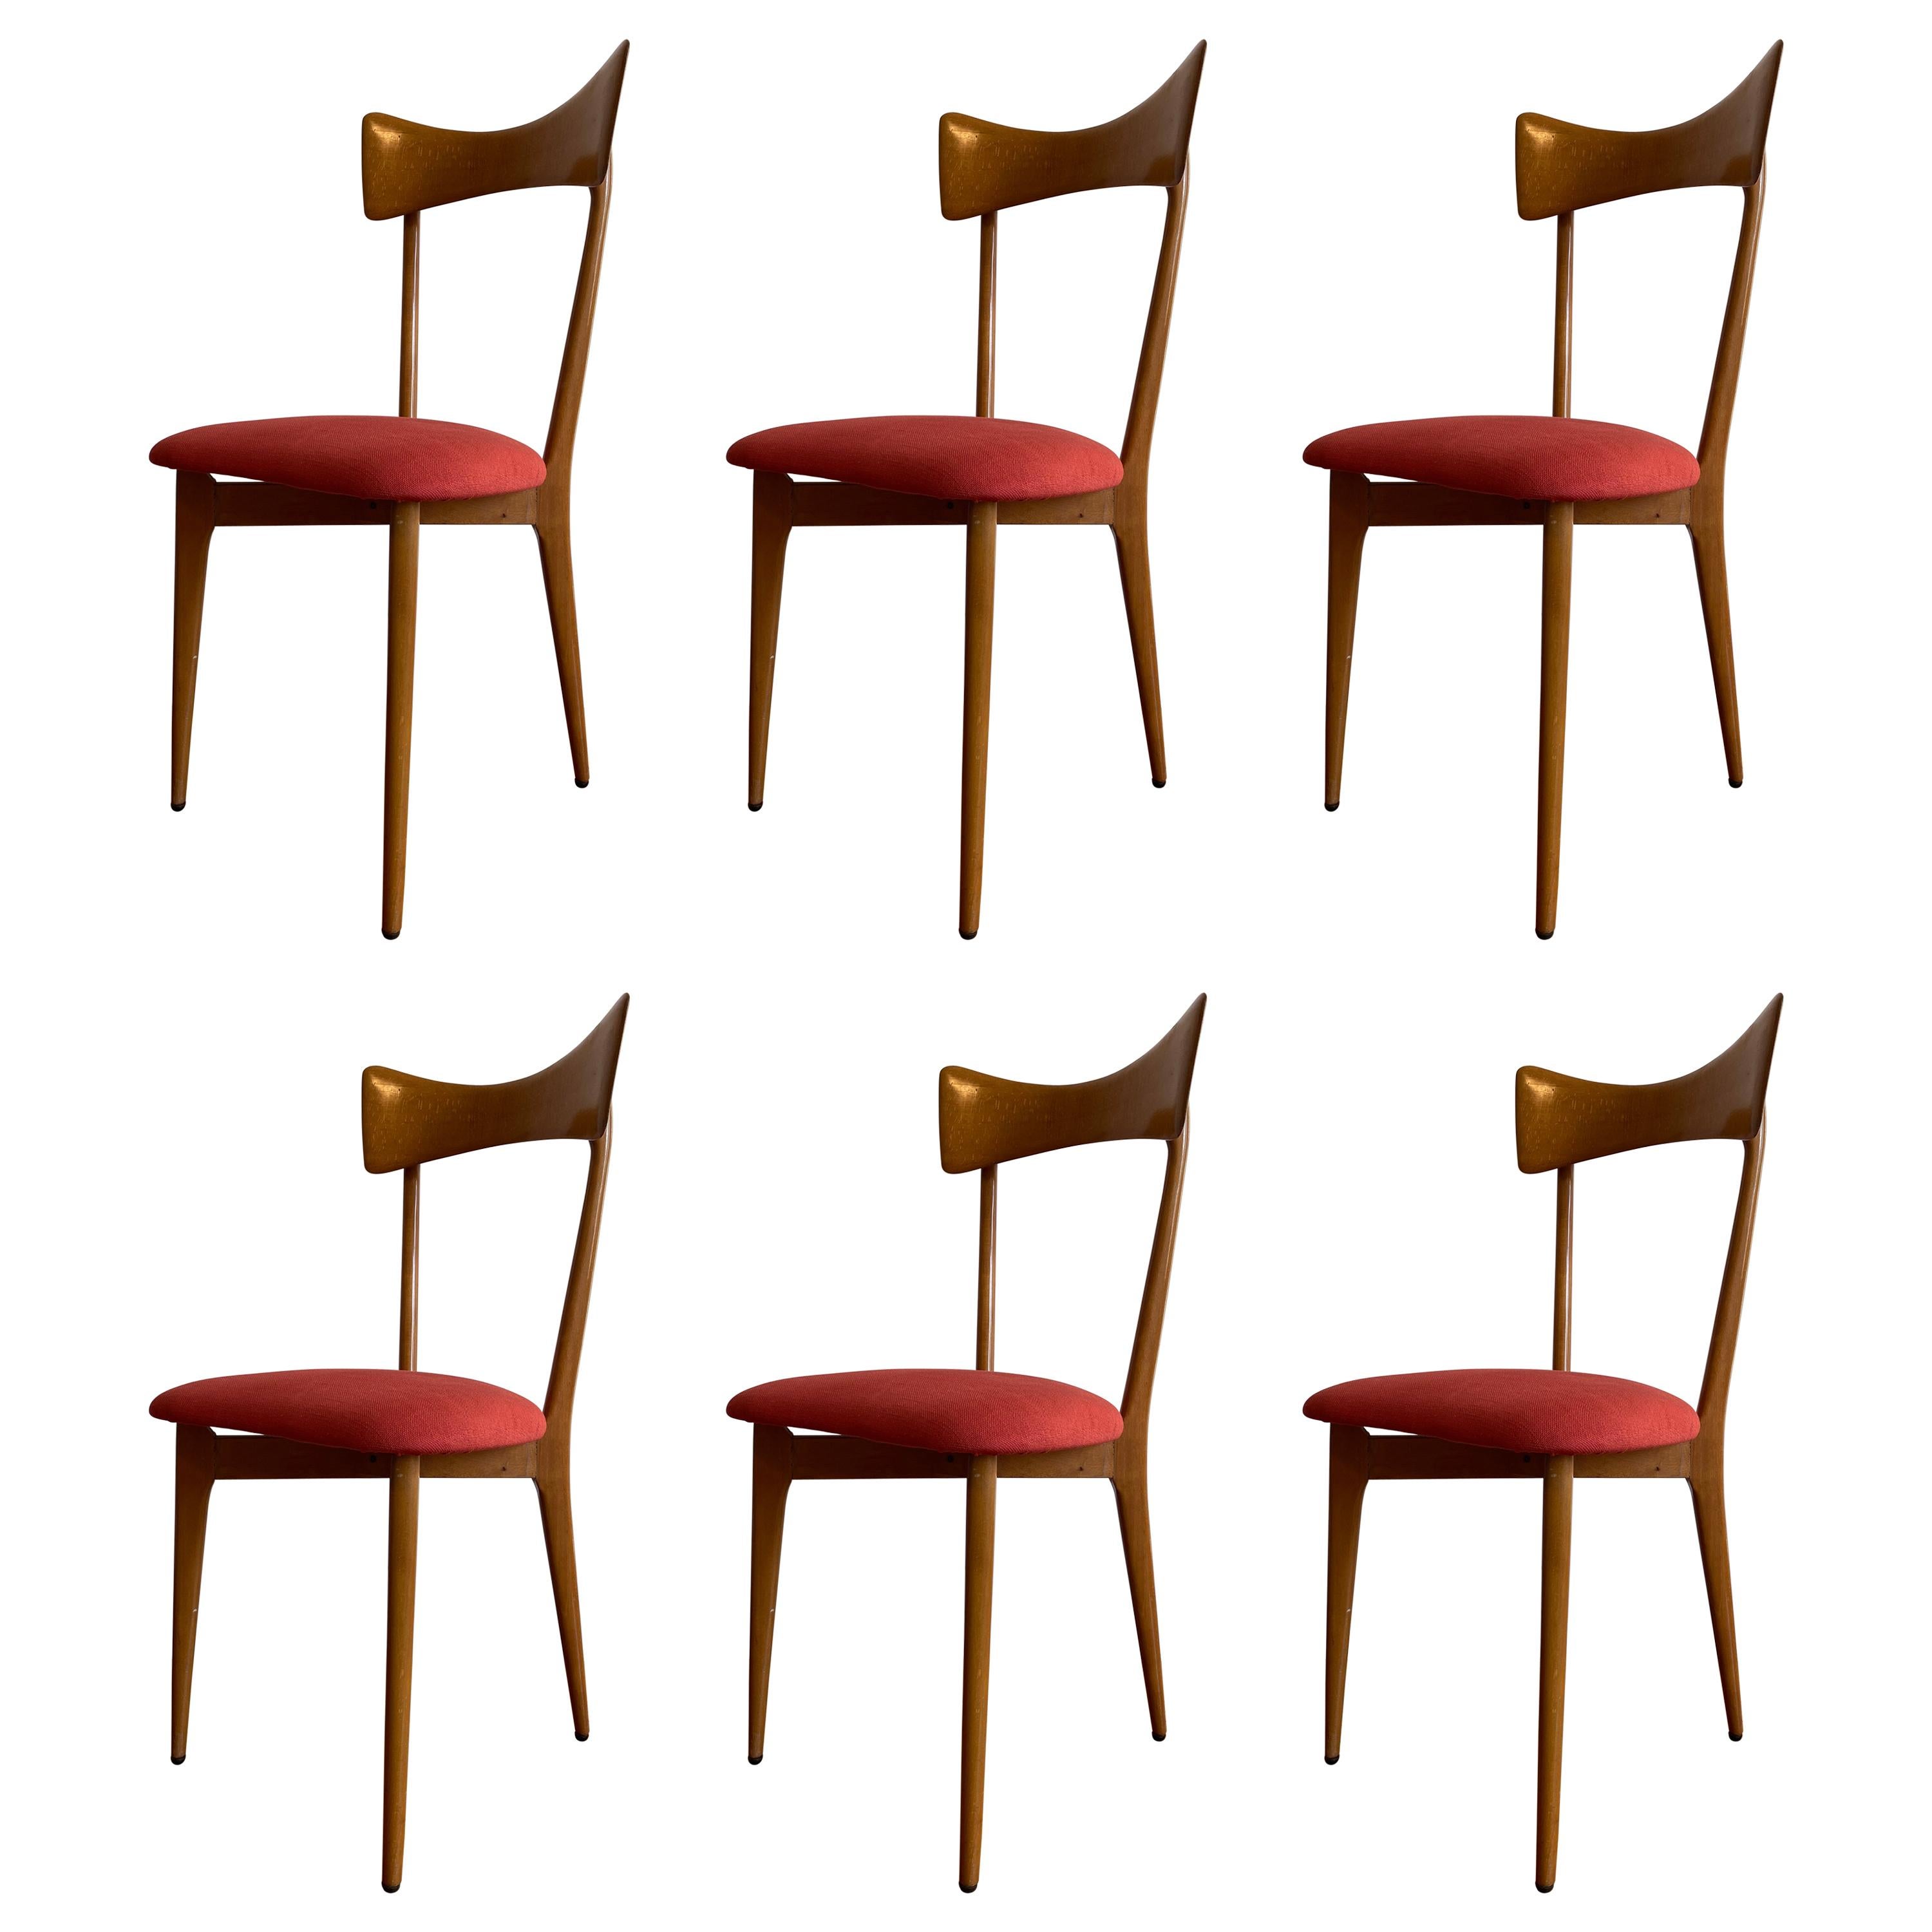 Ico Parisi "bow-tie" Ariberto Colombo Cantu Dining Chairs, Set of 6